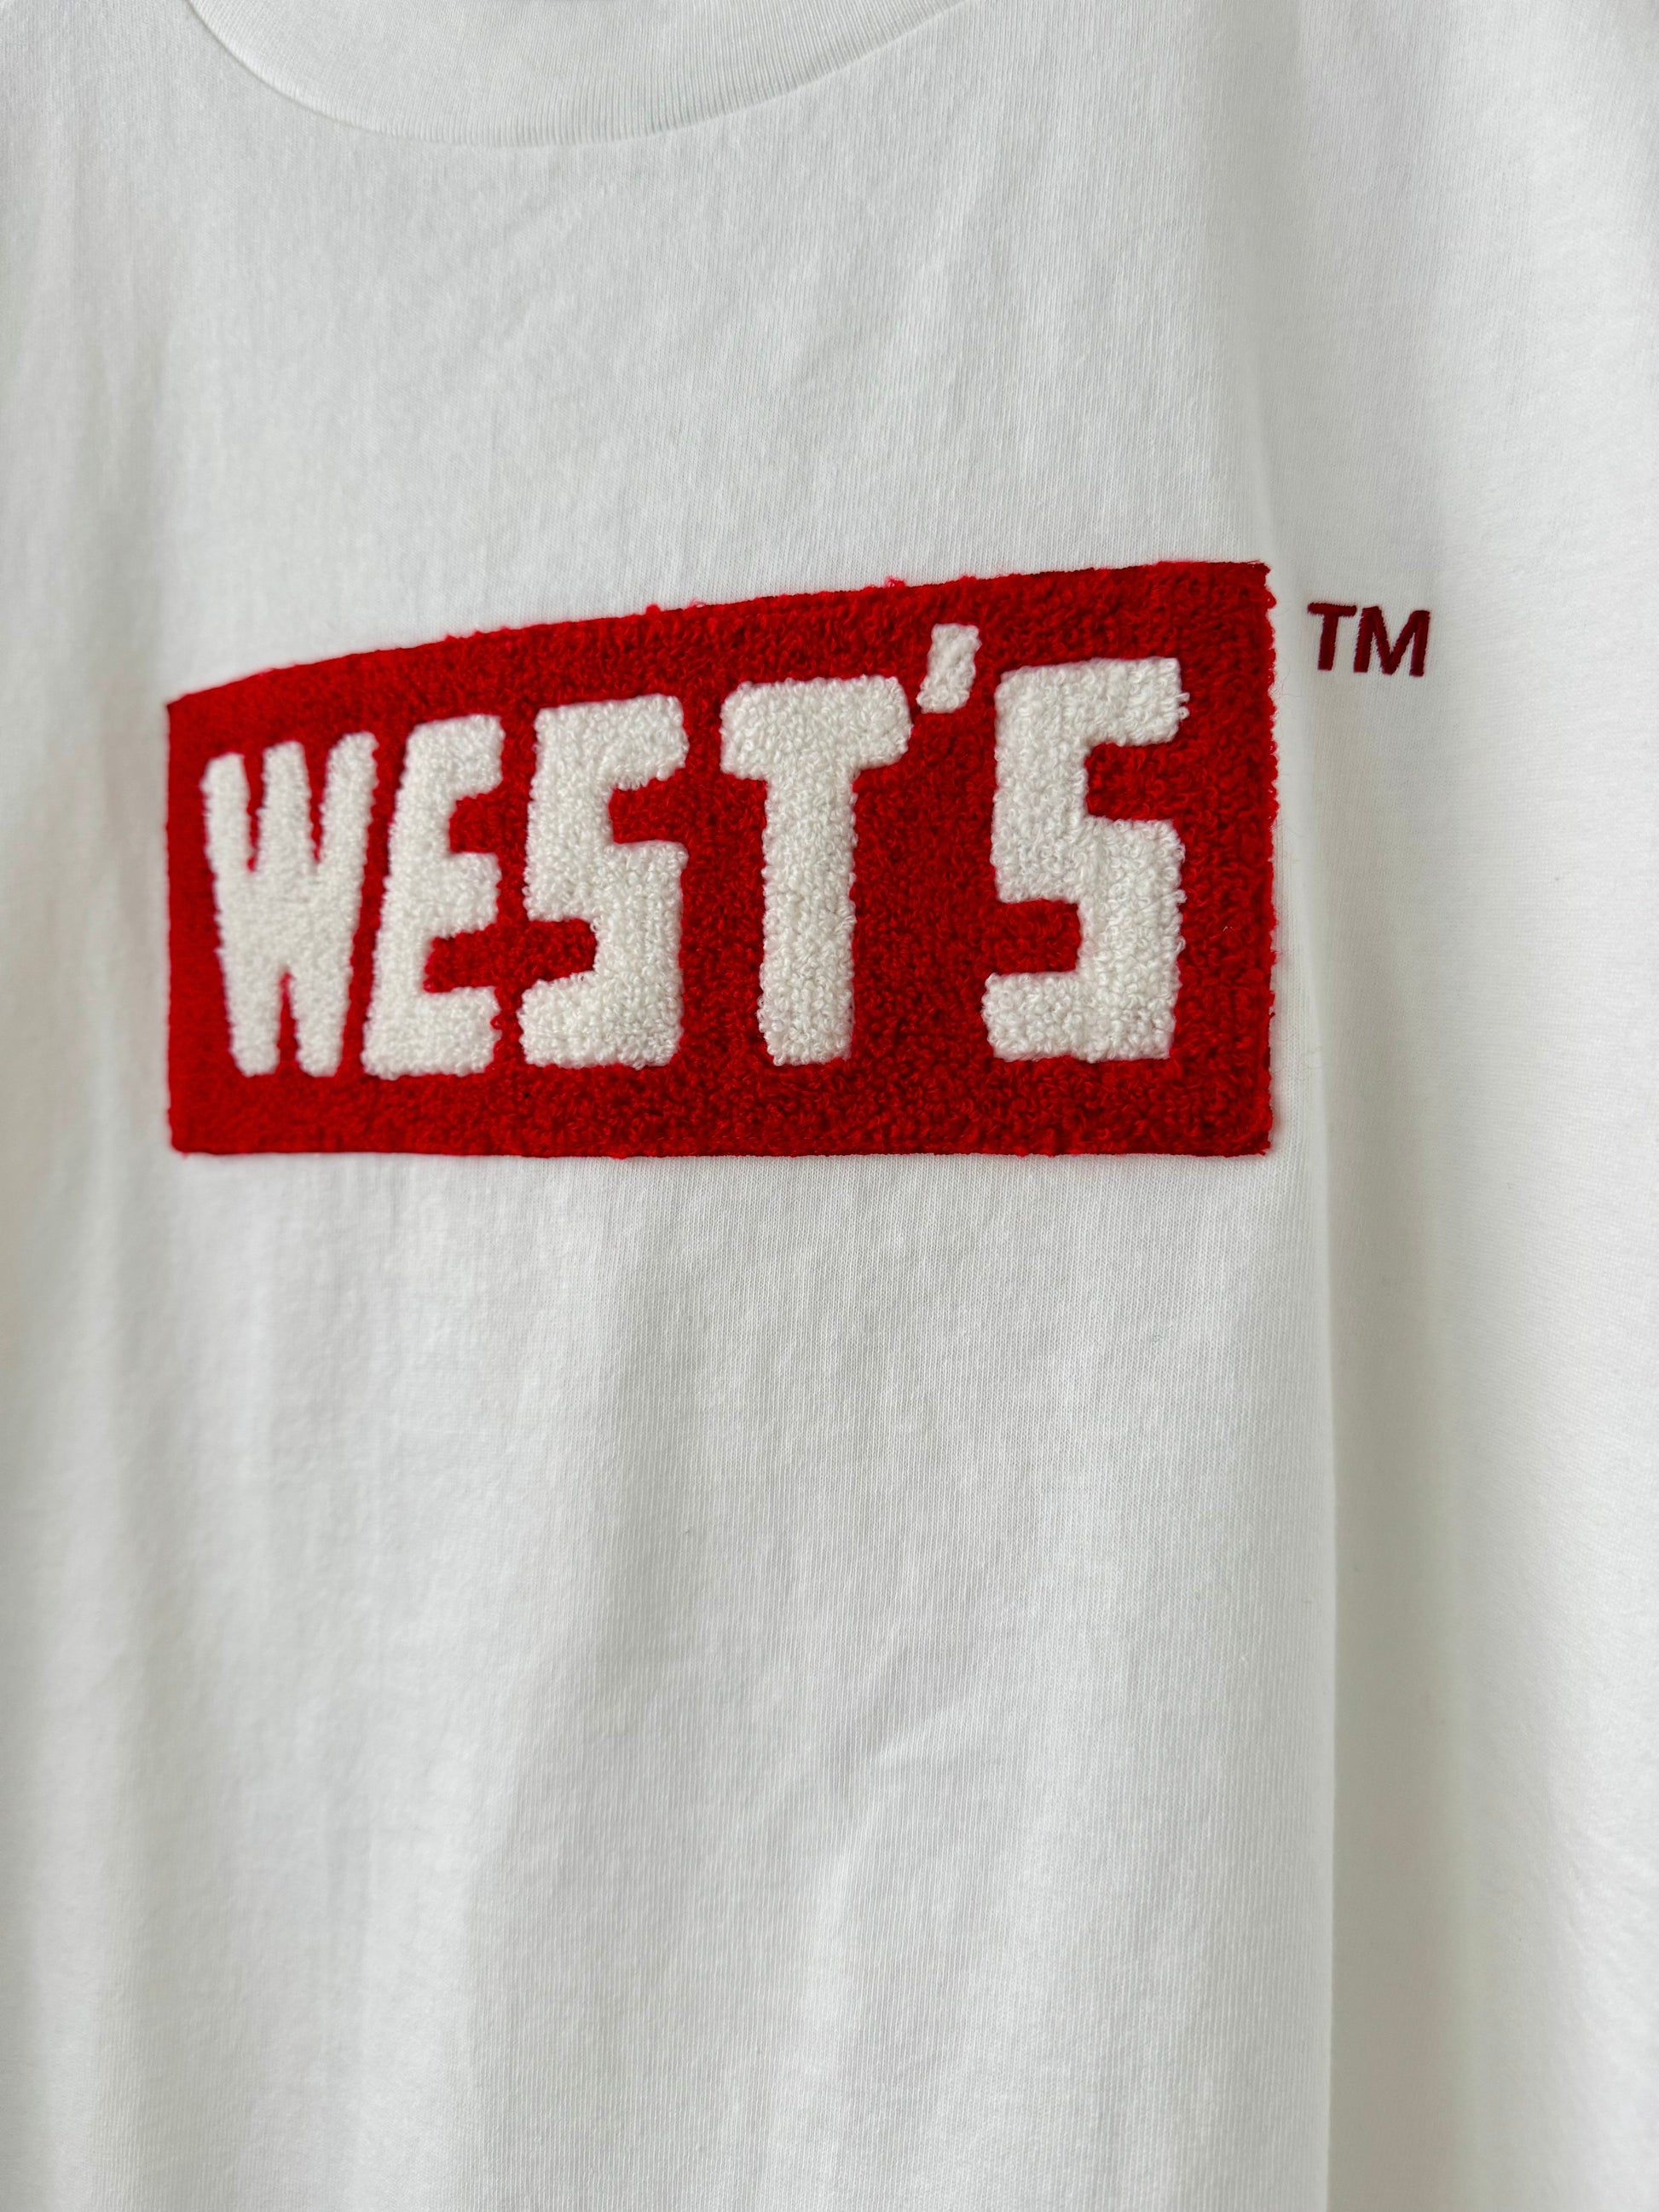 WEST'S BOX LOGO T-SHIRT WESTOVERALLS　Tシャツ　通販　取扱店